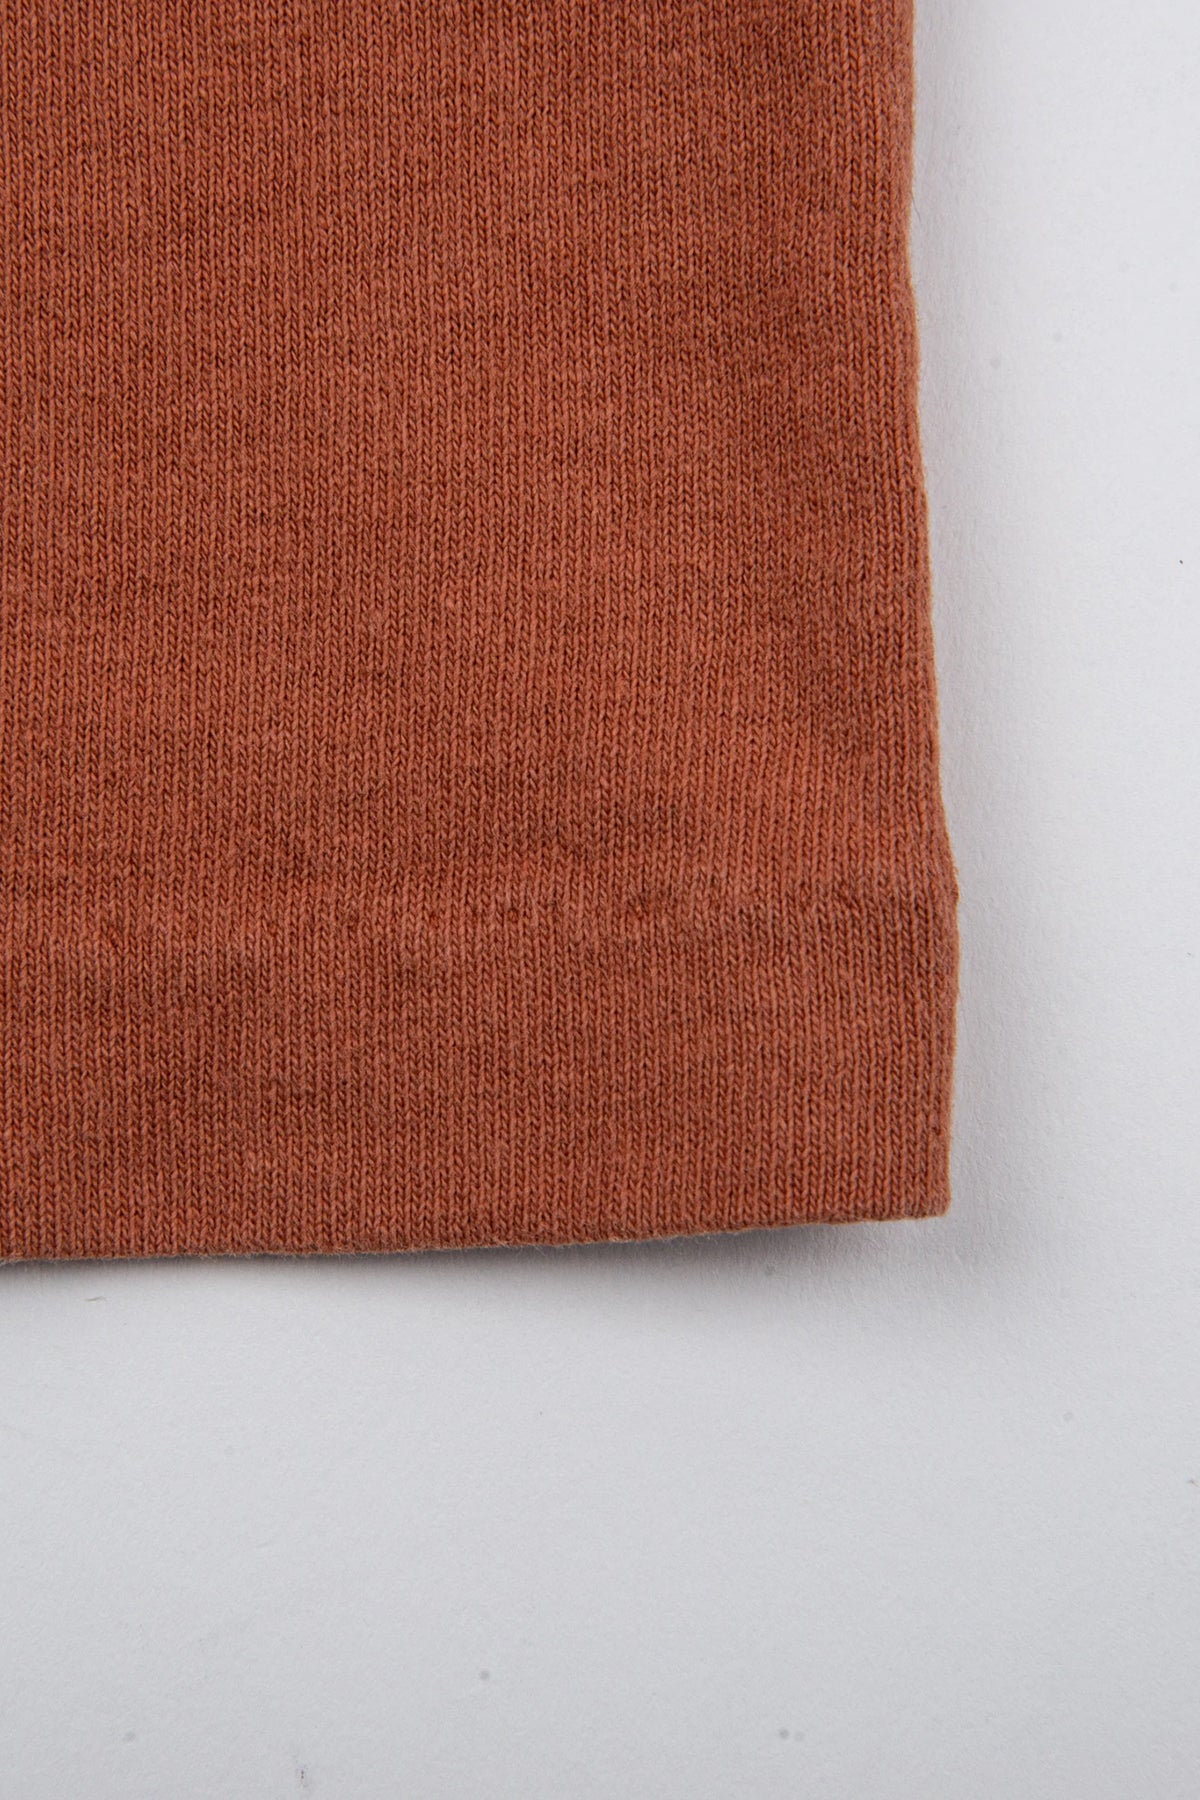 Freenote Cloth - 9 Ounce Pocket Tee - Rust